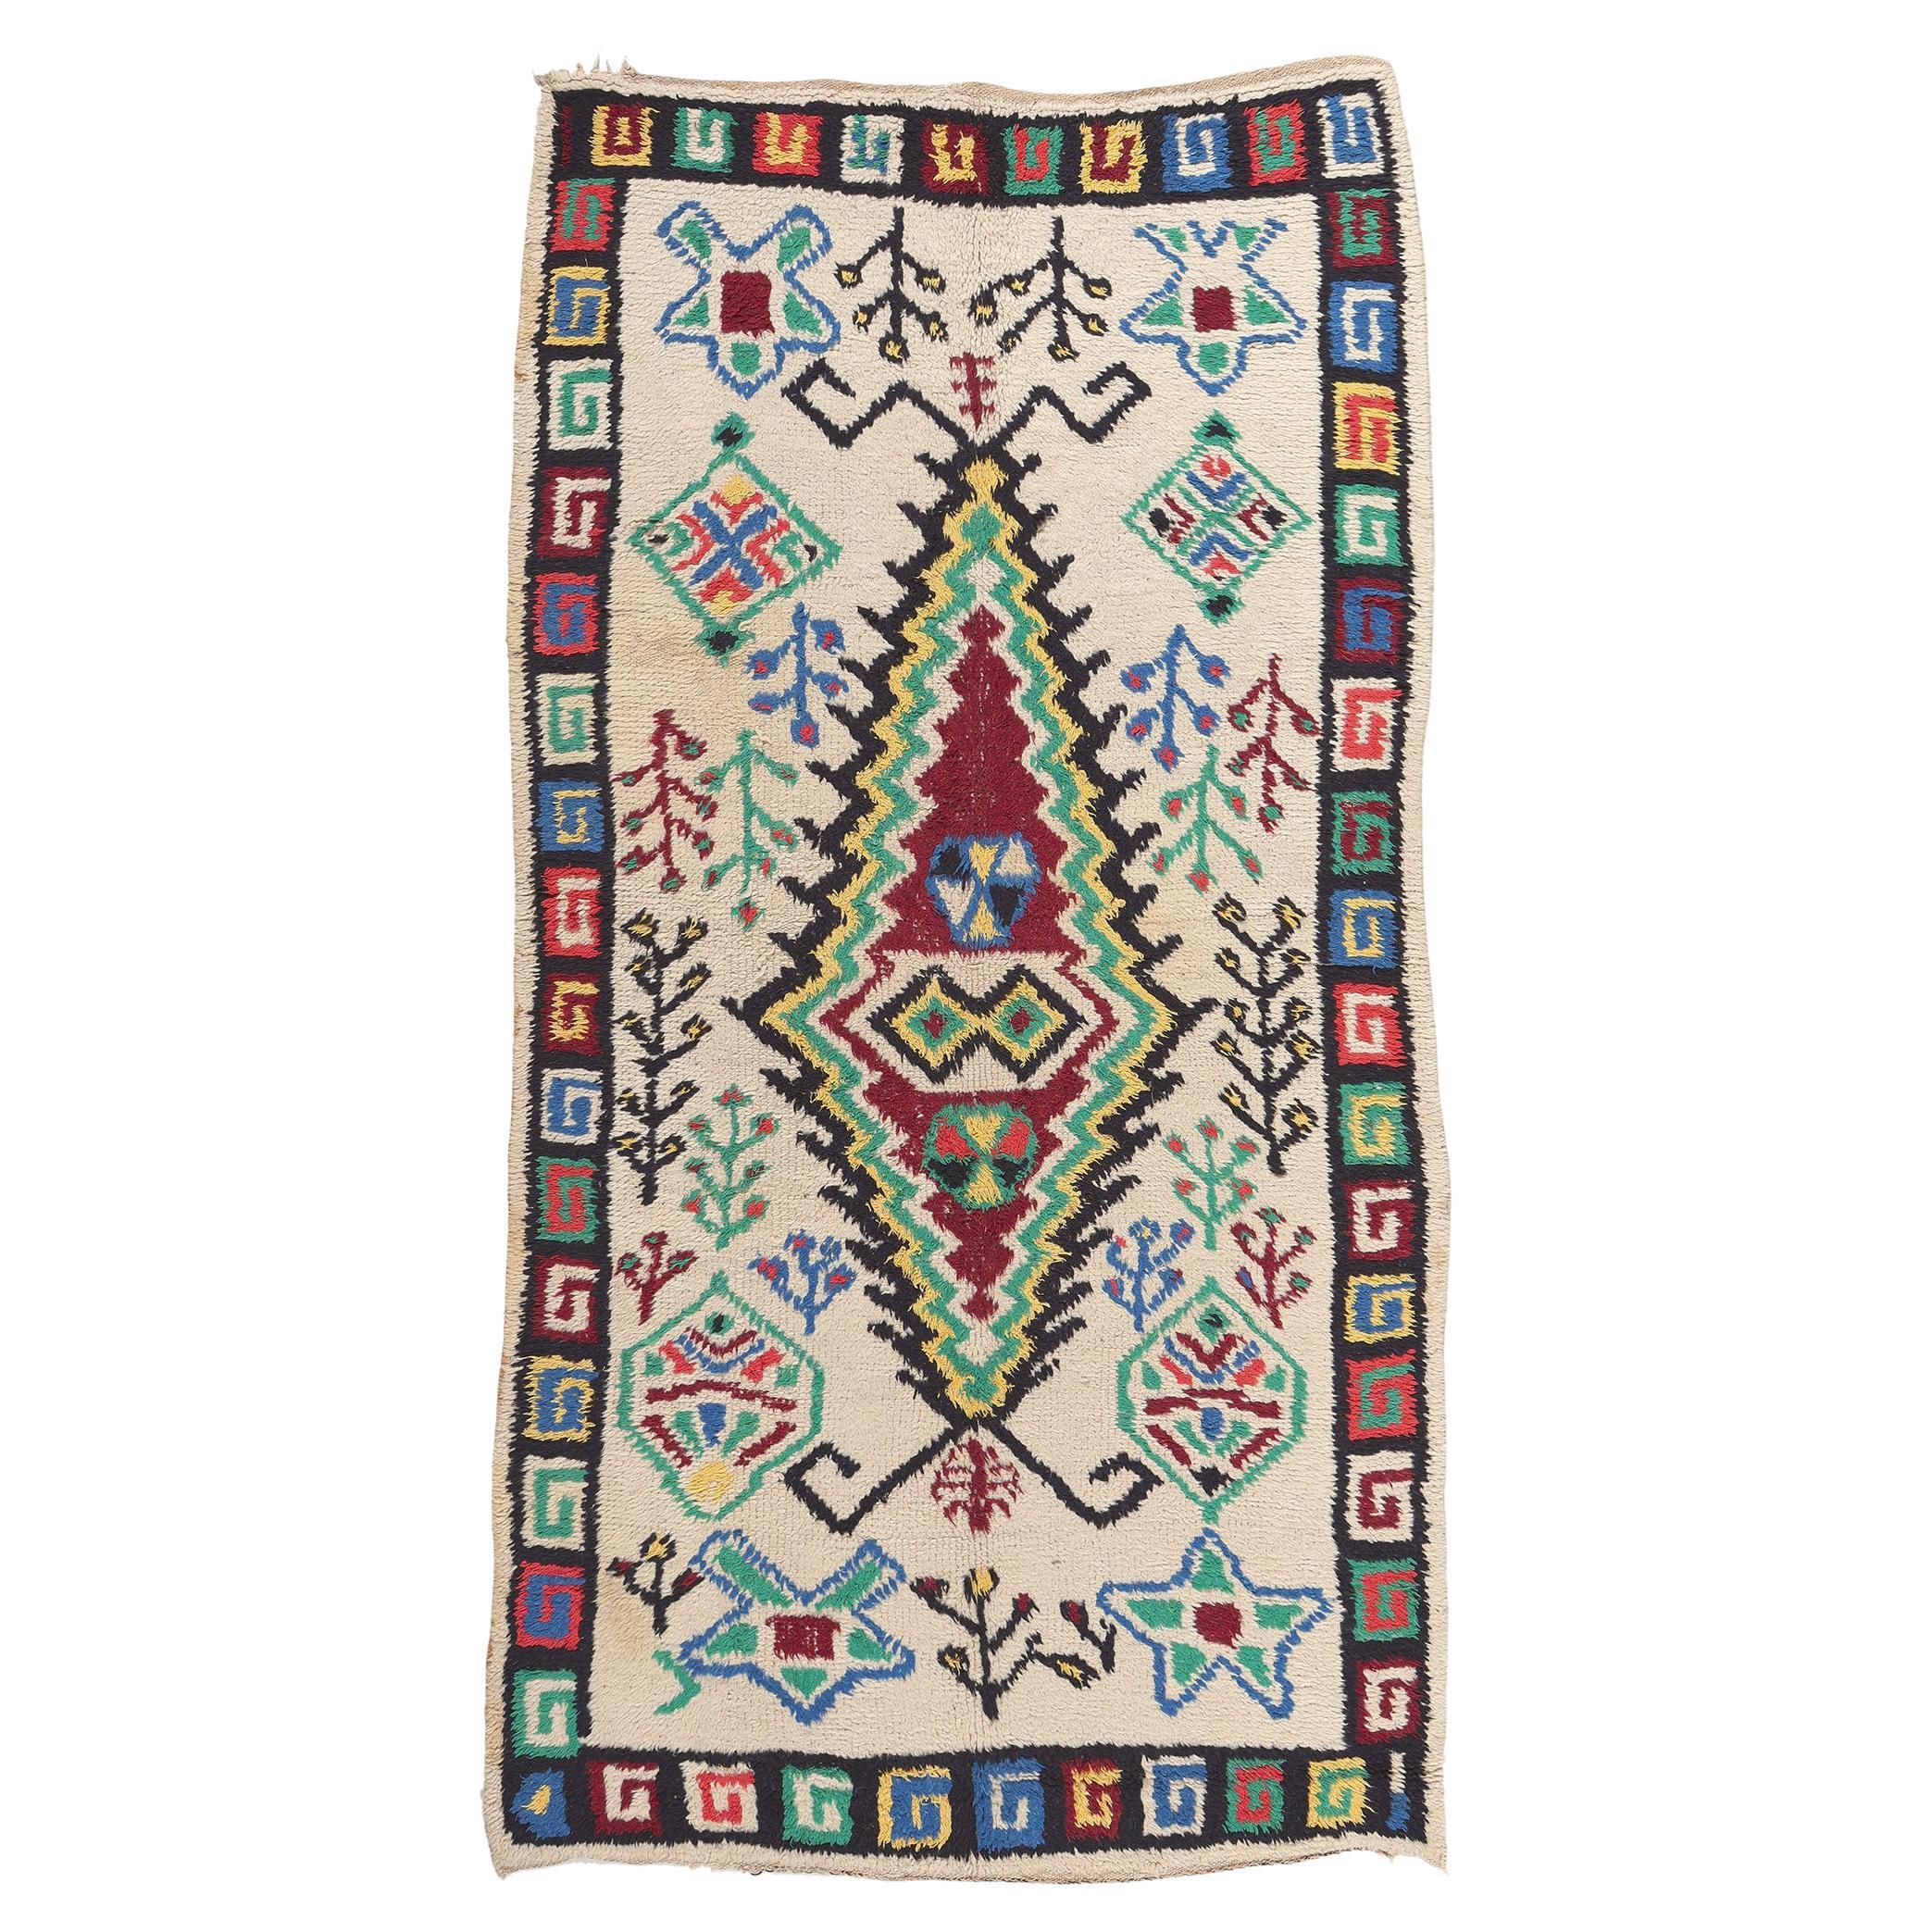 Marokkanischer Azilal-Teppich im Vintage-Stil, Stammeskunst-Enchantment Meets Cozy Boho Chic, farbenfroher